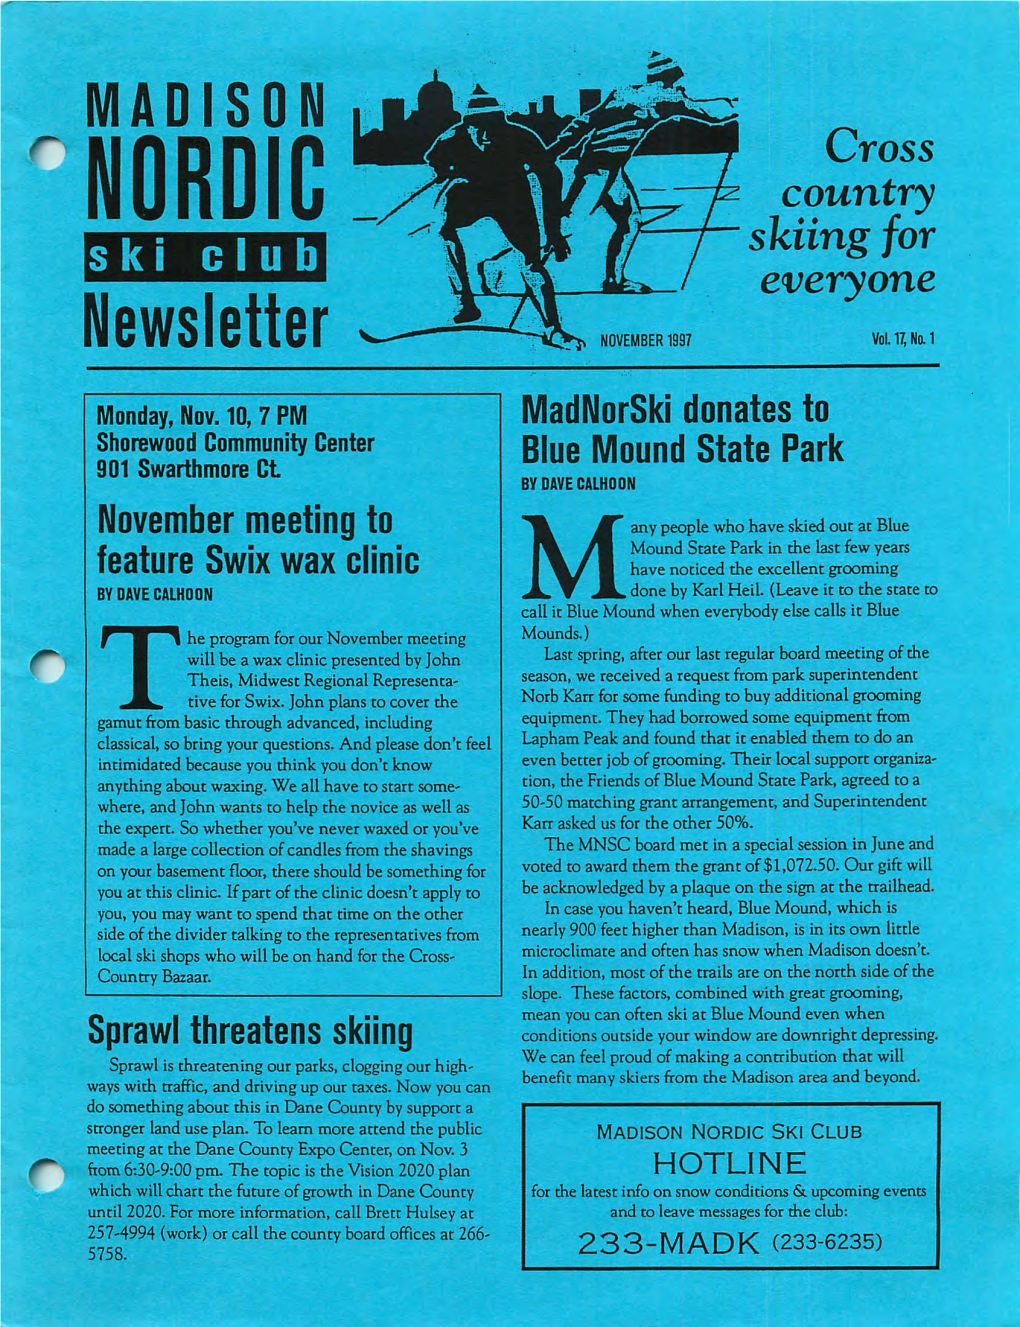 Madnorskinews, November 1997